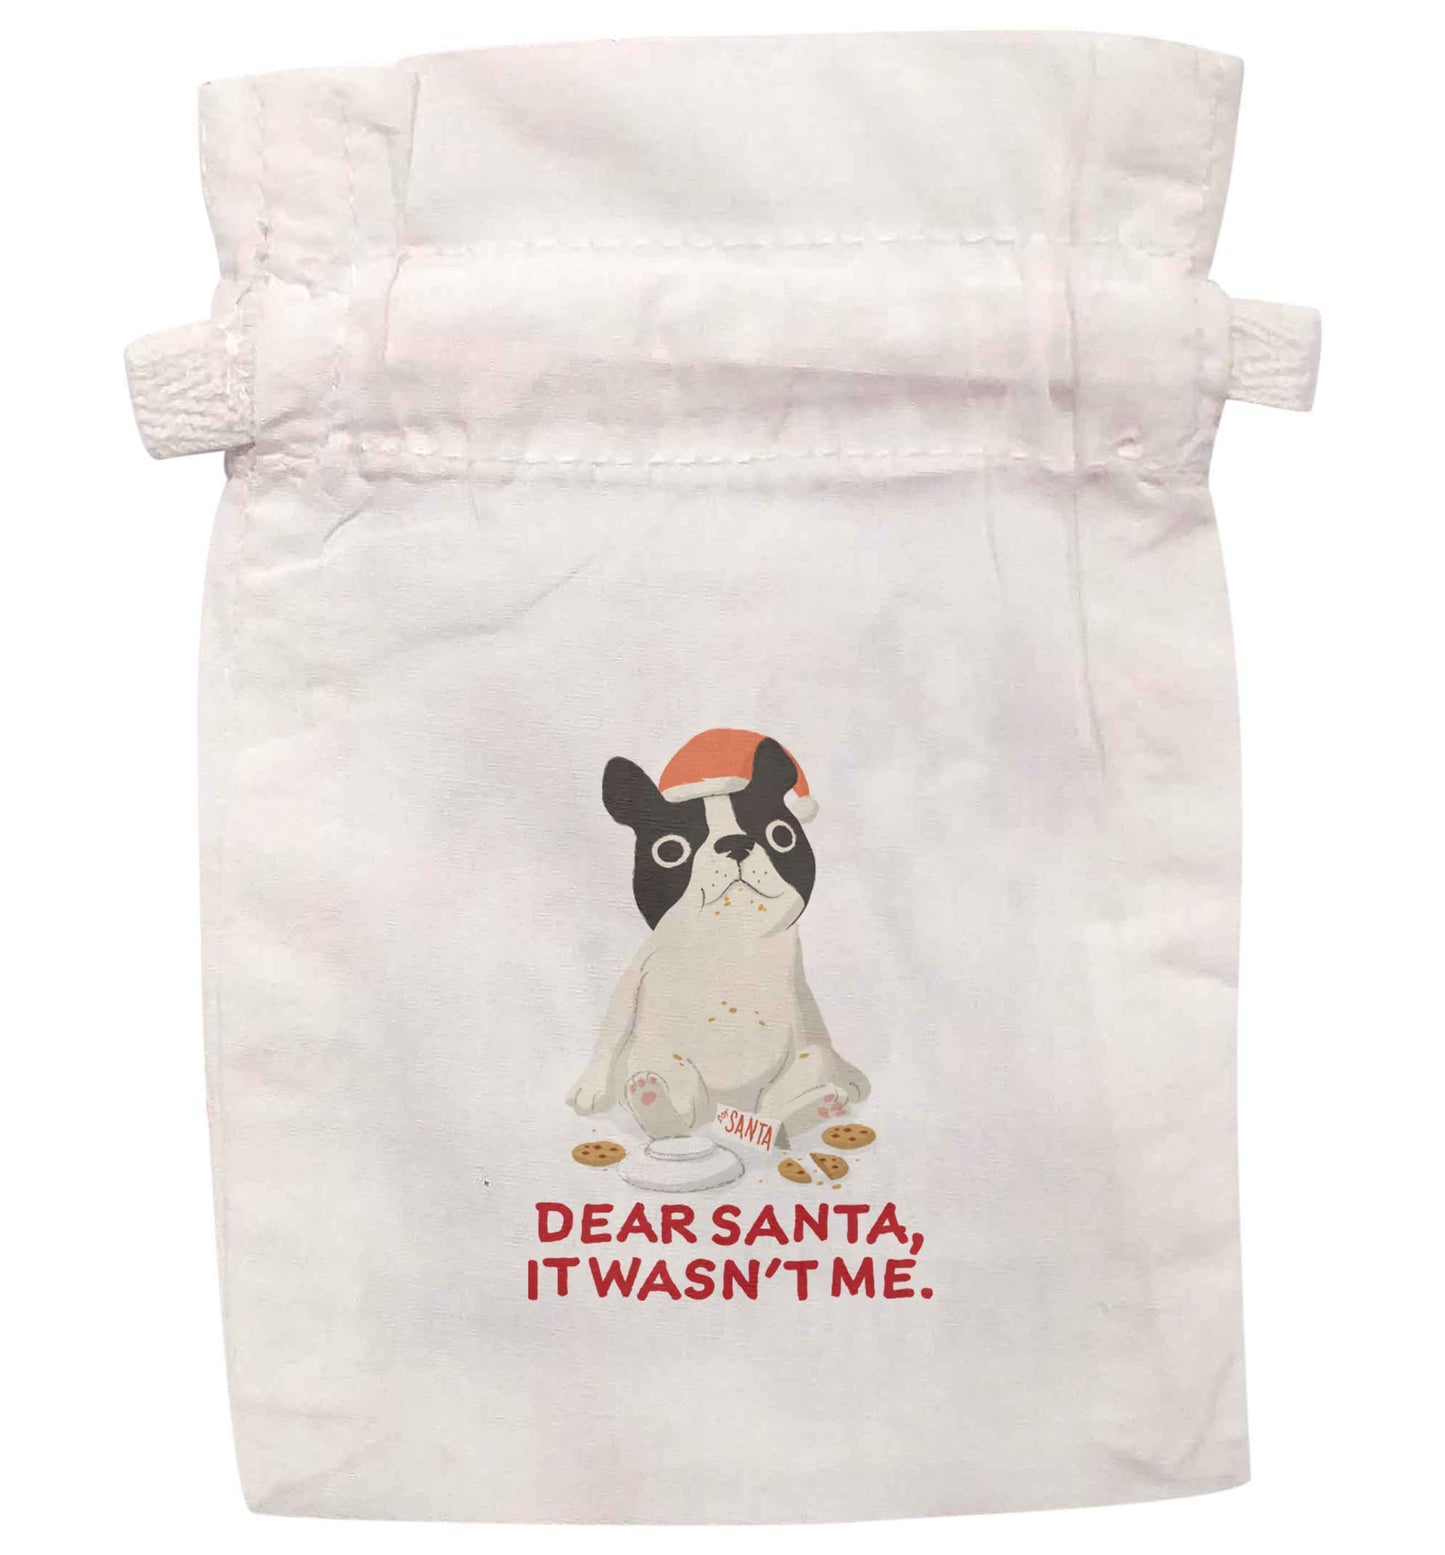 Dear Santa it wasn't me | XS - L | Pouch / Drawstring bag / Sack | Organic Cotton | Bulk discounts available!